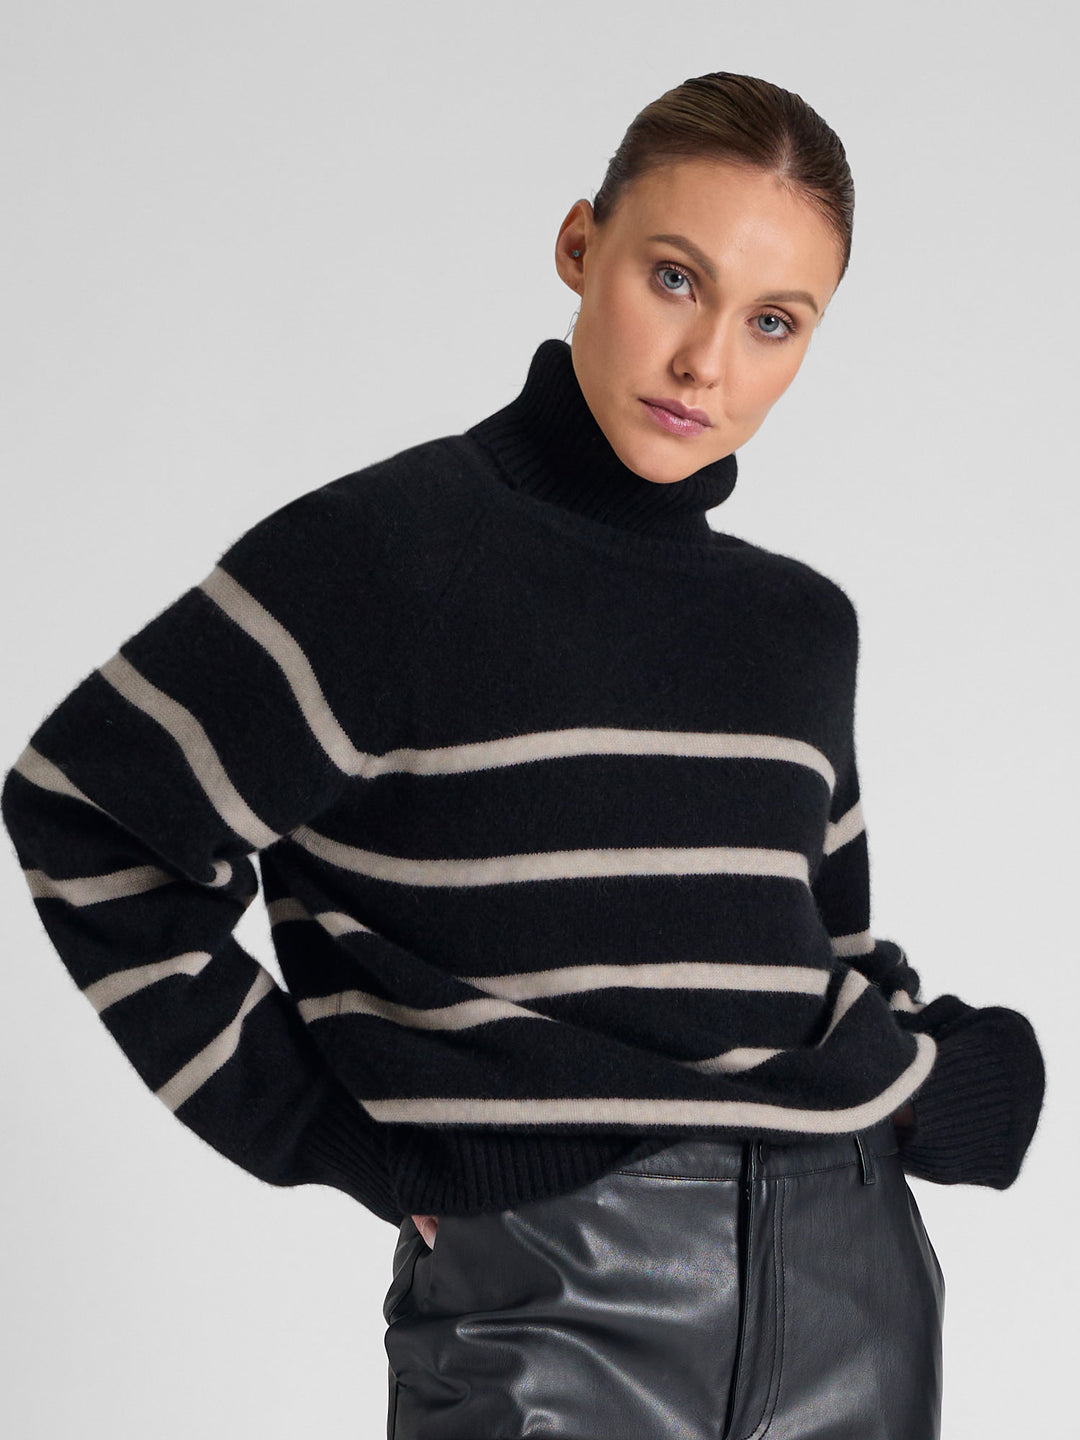 Turtleneck cashmere sweater with stripes. 100% pure cashmere. Scandinavian design by Kashmina. Color: Black, ginger.